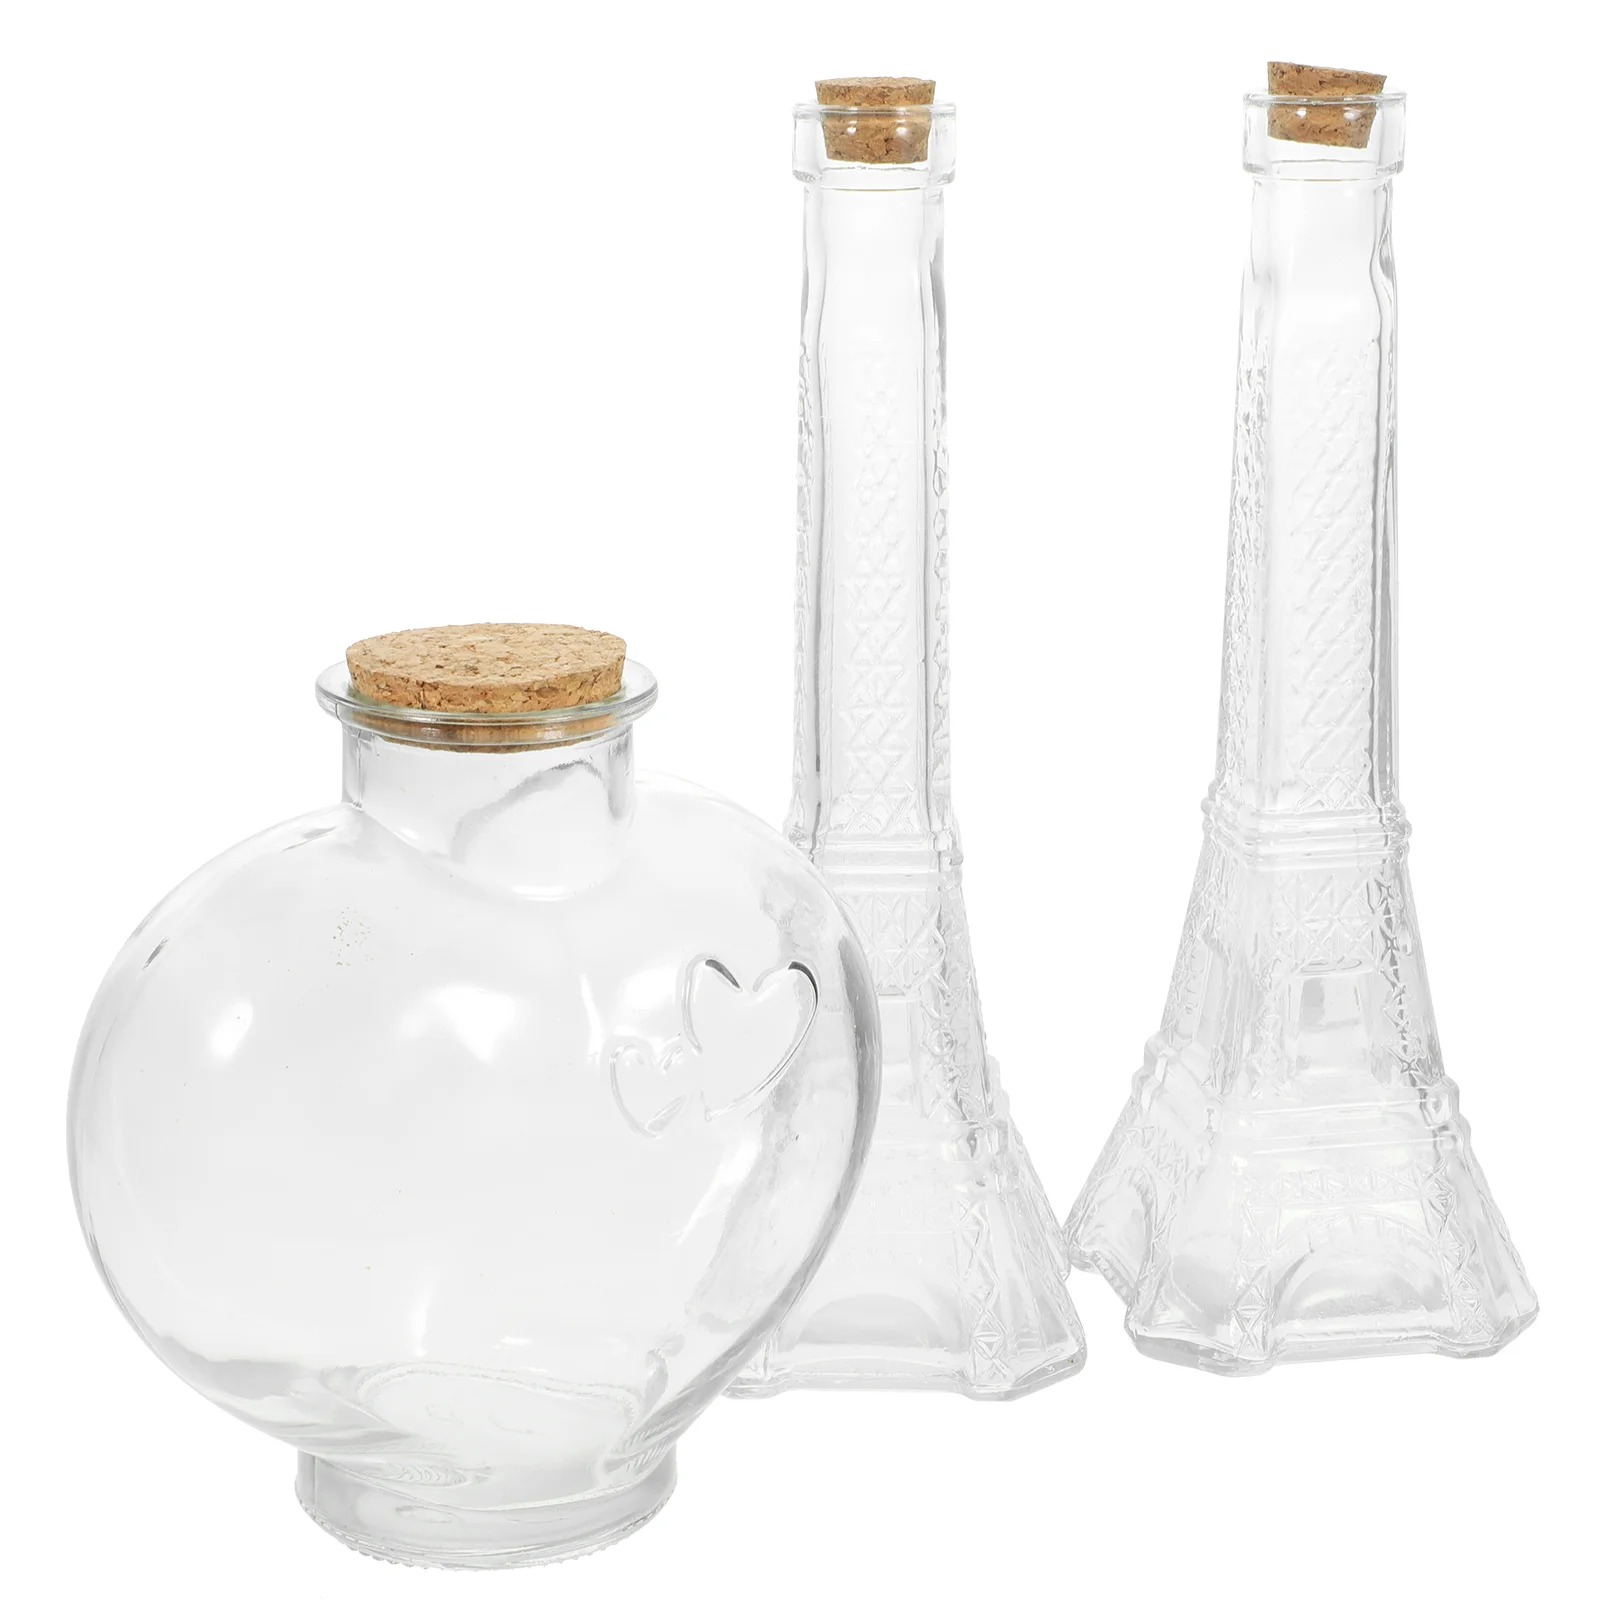 

Necklace Wishing Jar Glass Jars Mini Bottles Cork Drift Heart Shaped Containers